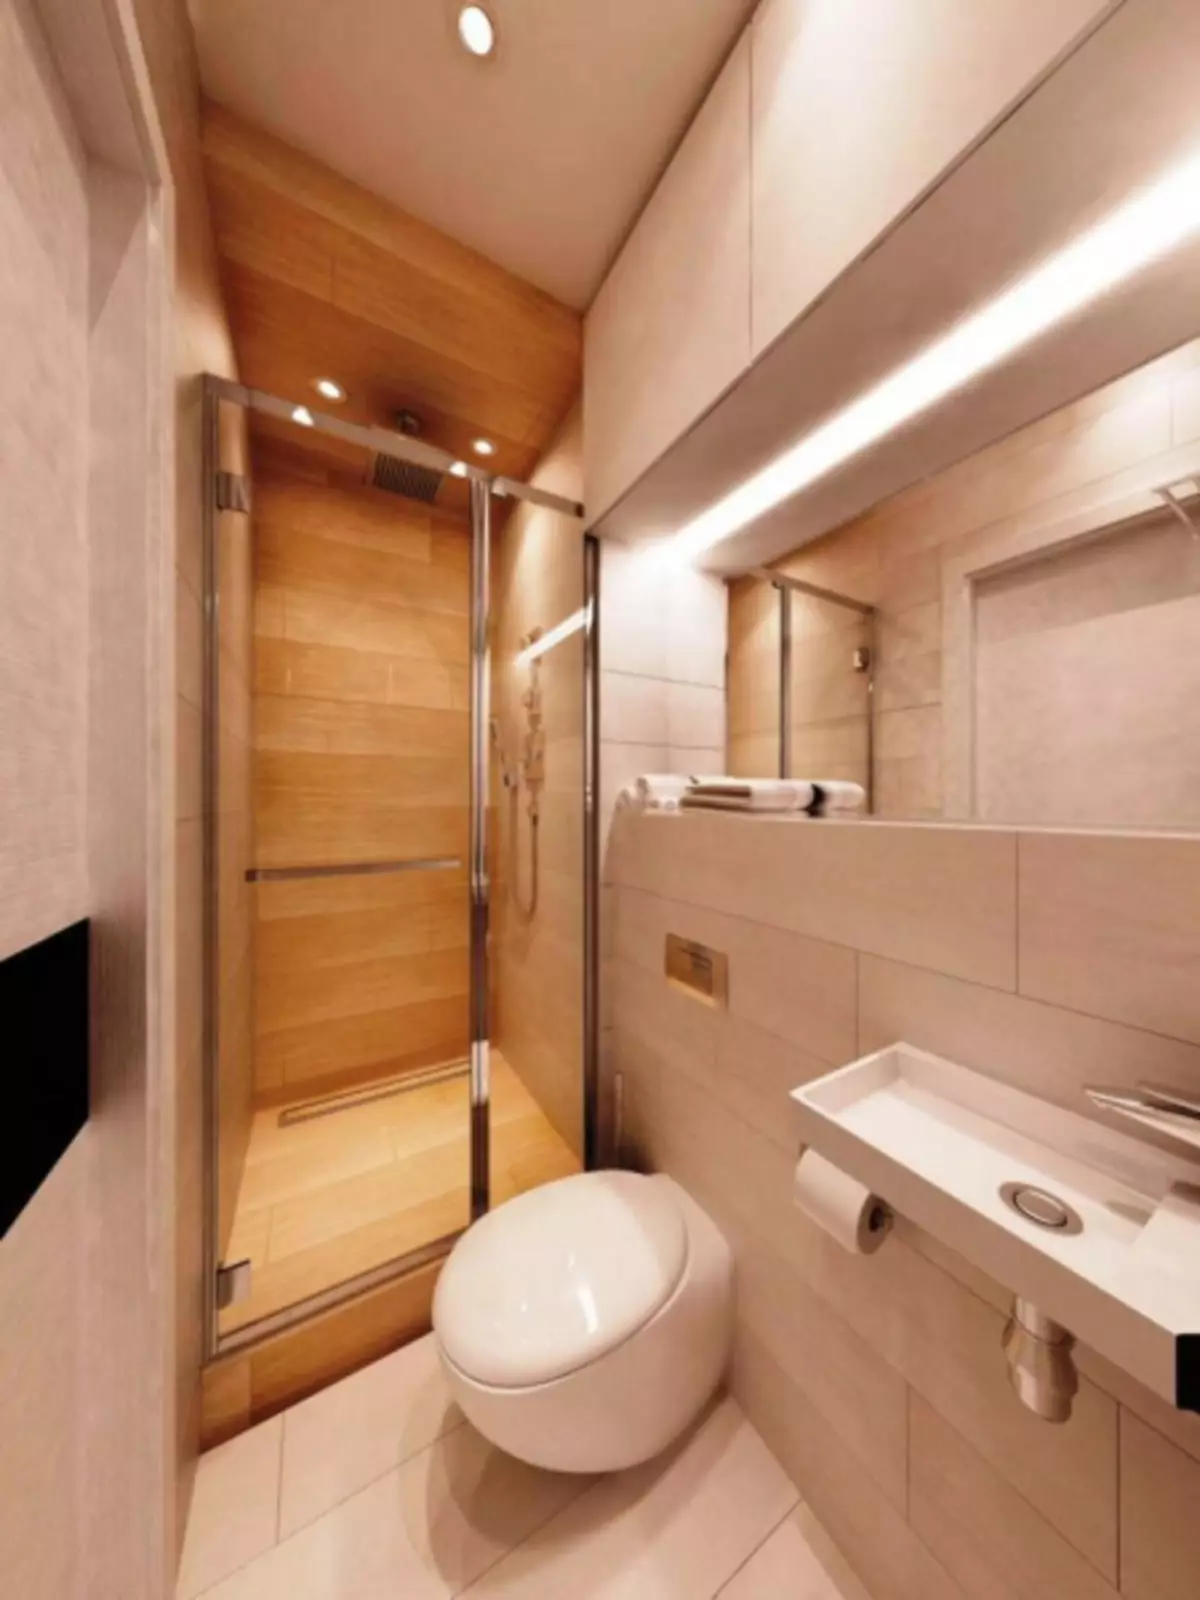 3-bedroom apartment design - 100 photos of stylish interior ideas